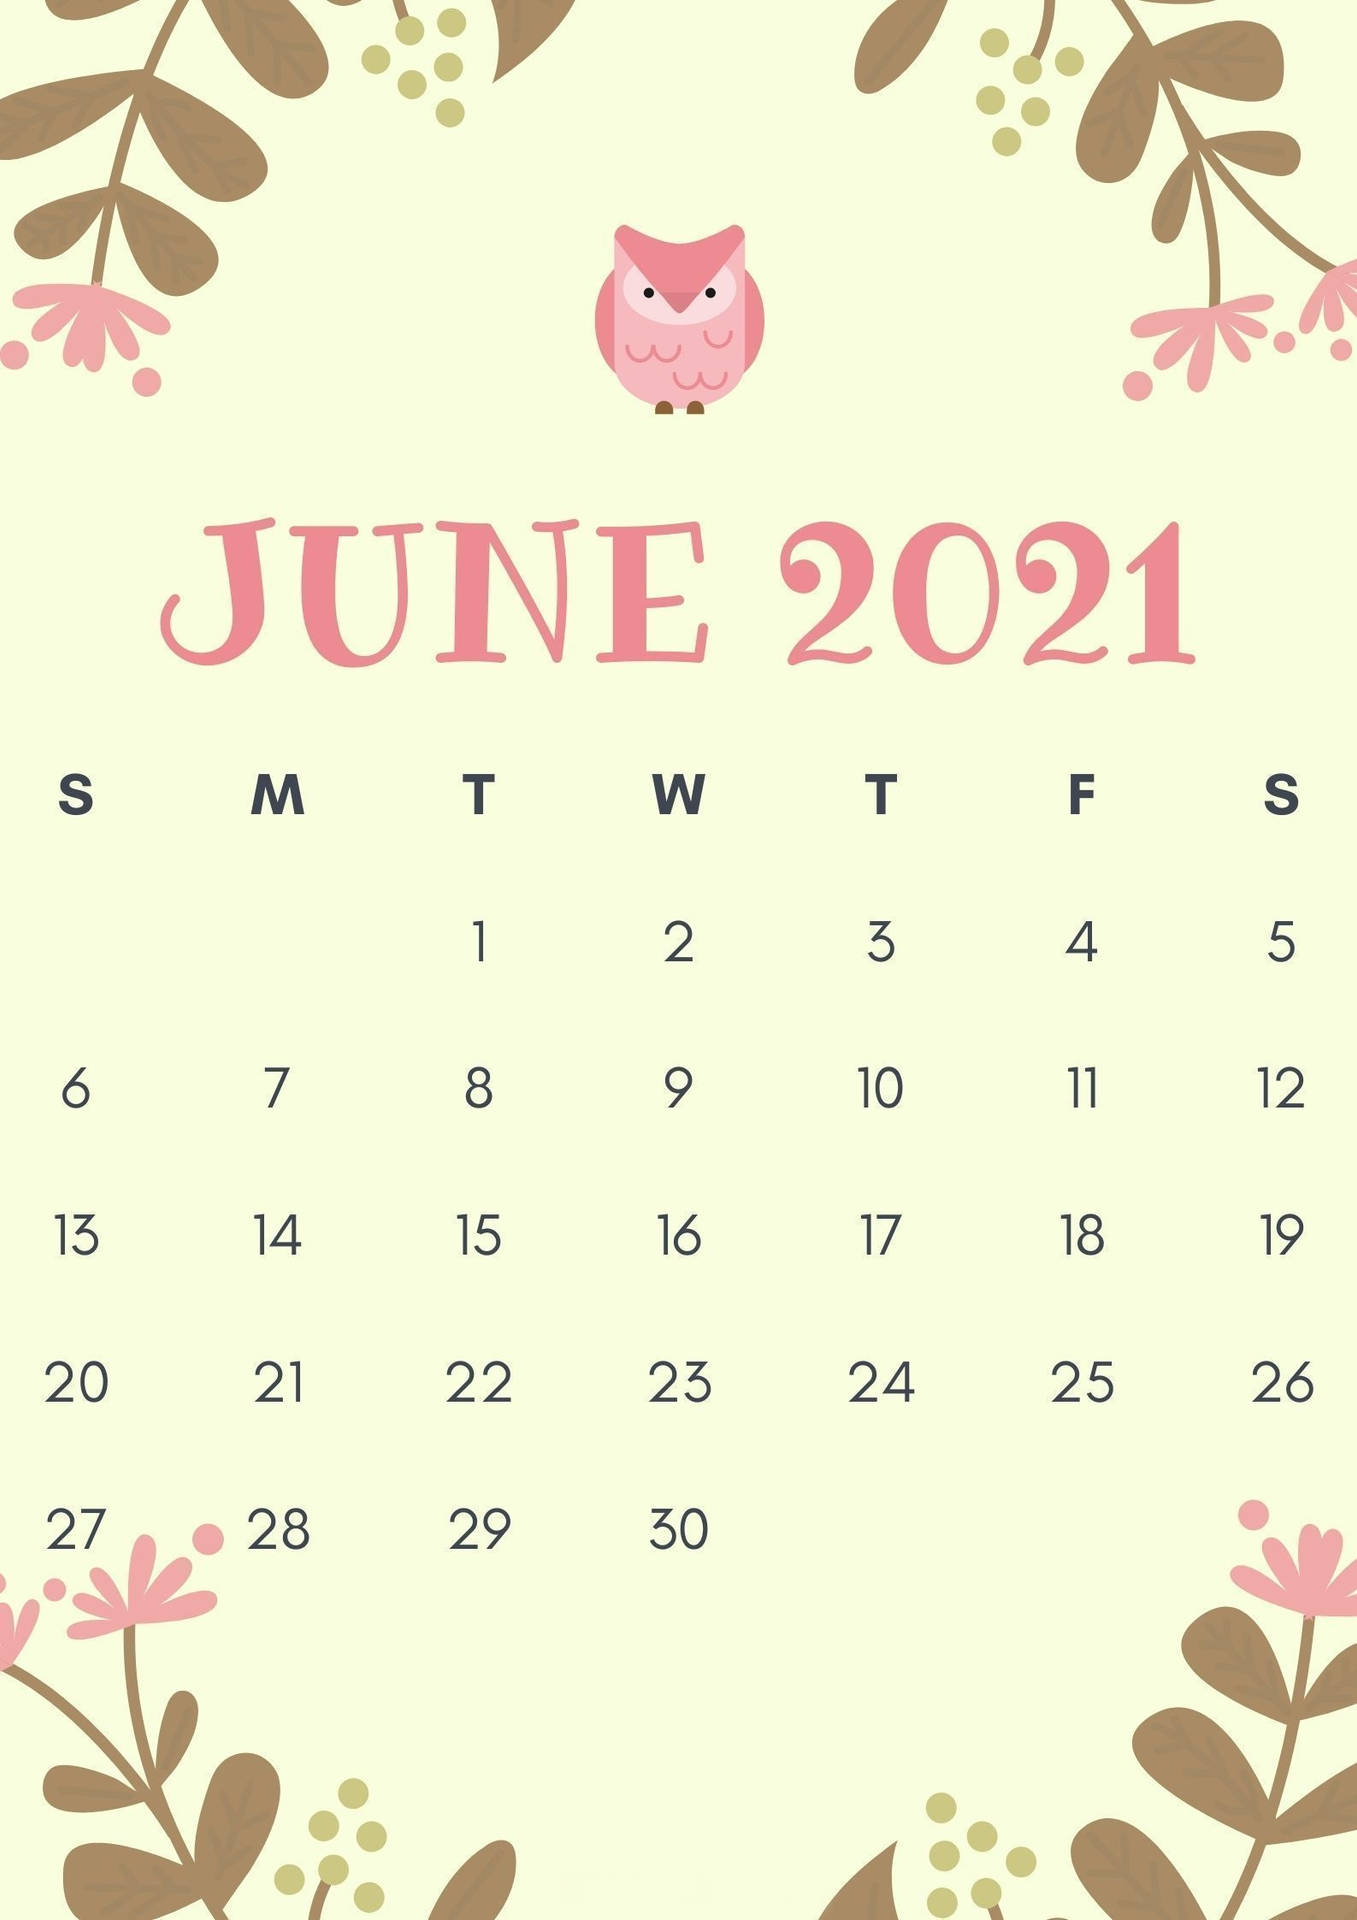 Cool June 2021 Calendar Picture